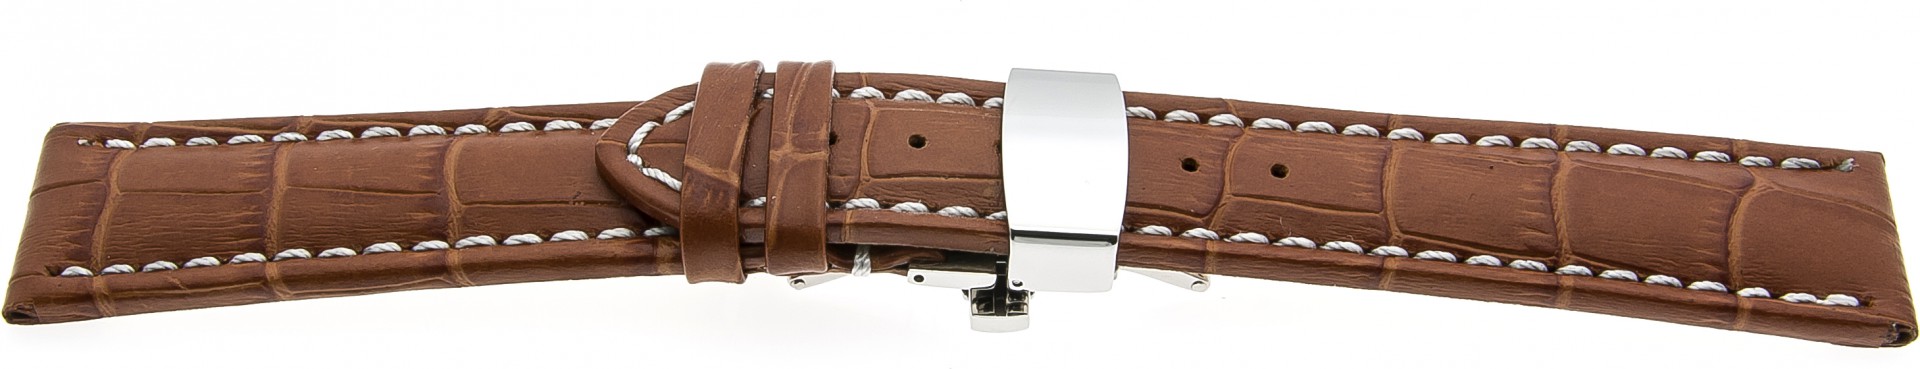   Uhrenarmband Kroko look Butterfly-Schließe - Leder, geprägt - hellbraun mit weißer Naht 